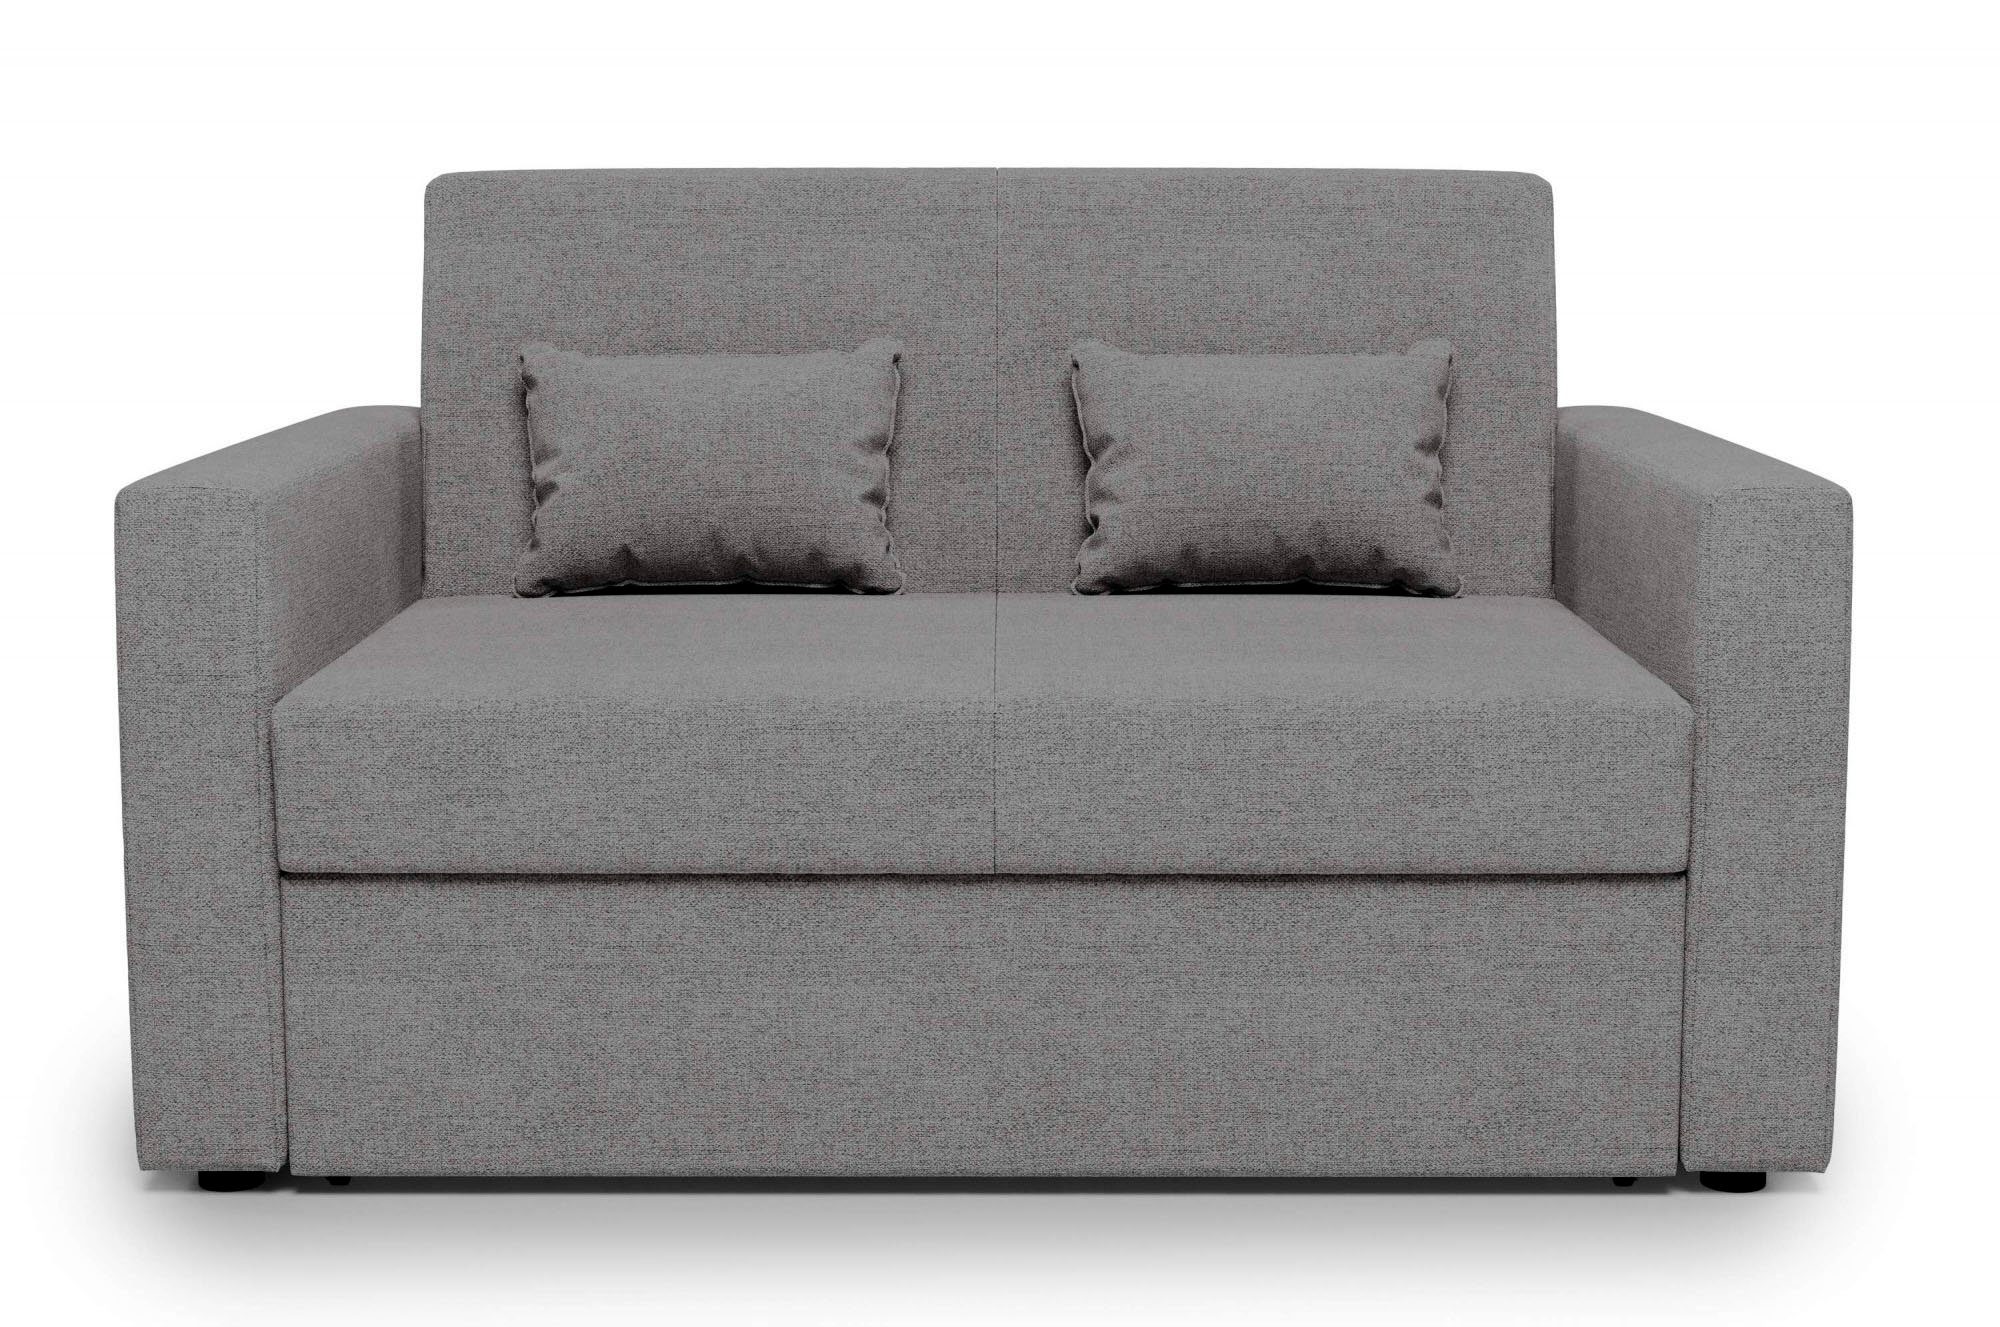 INOSIGN Schlafsofa Ravena, kompaktes 2-Sitzer Sofa, mit Bettfunktion